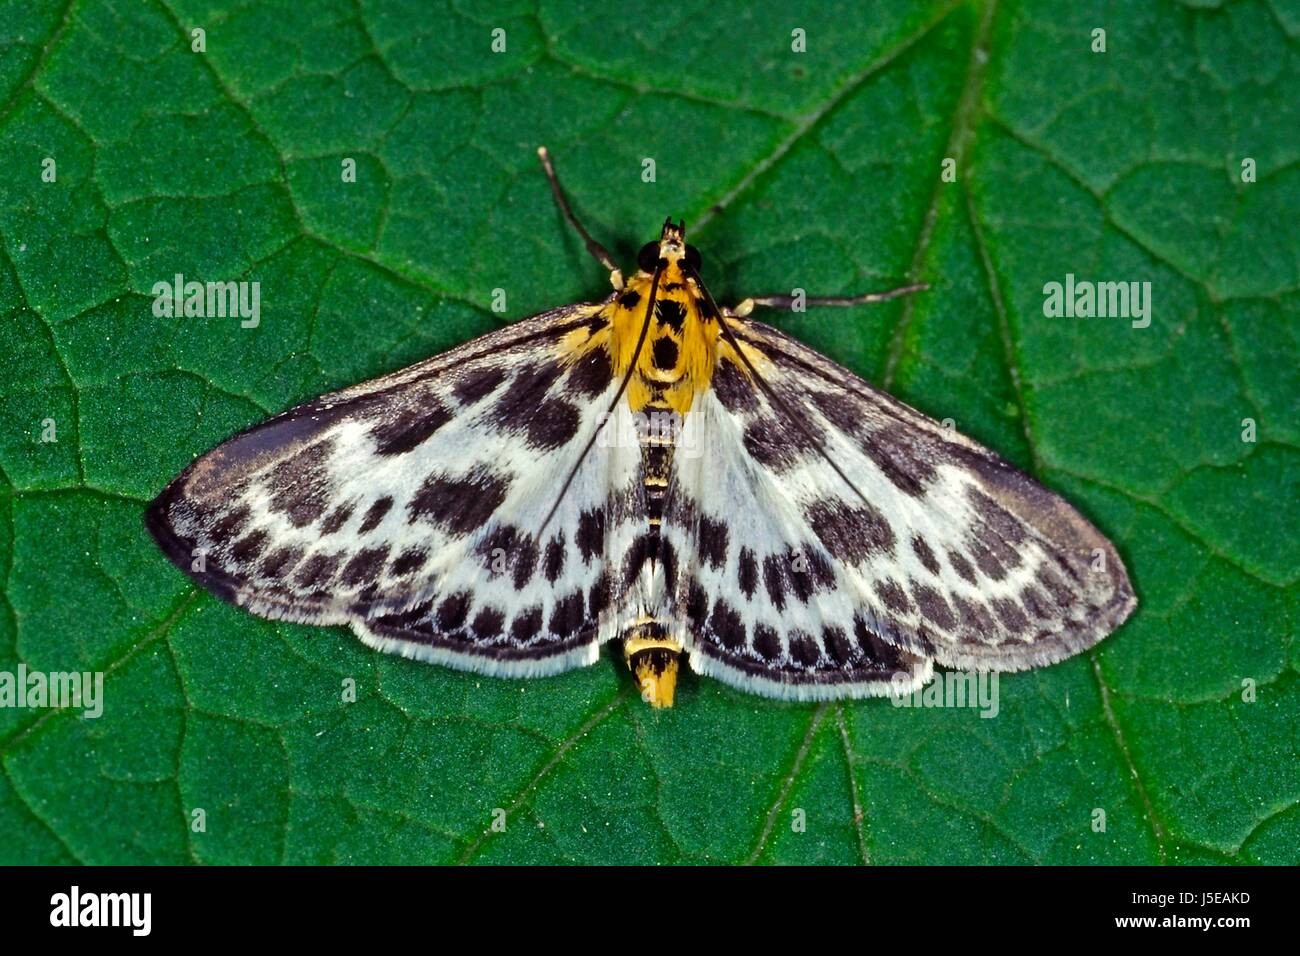 butterfly butterflies leave moths eurrhypara hortulata eurrhypara urticae Stock Photo